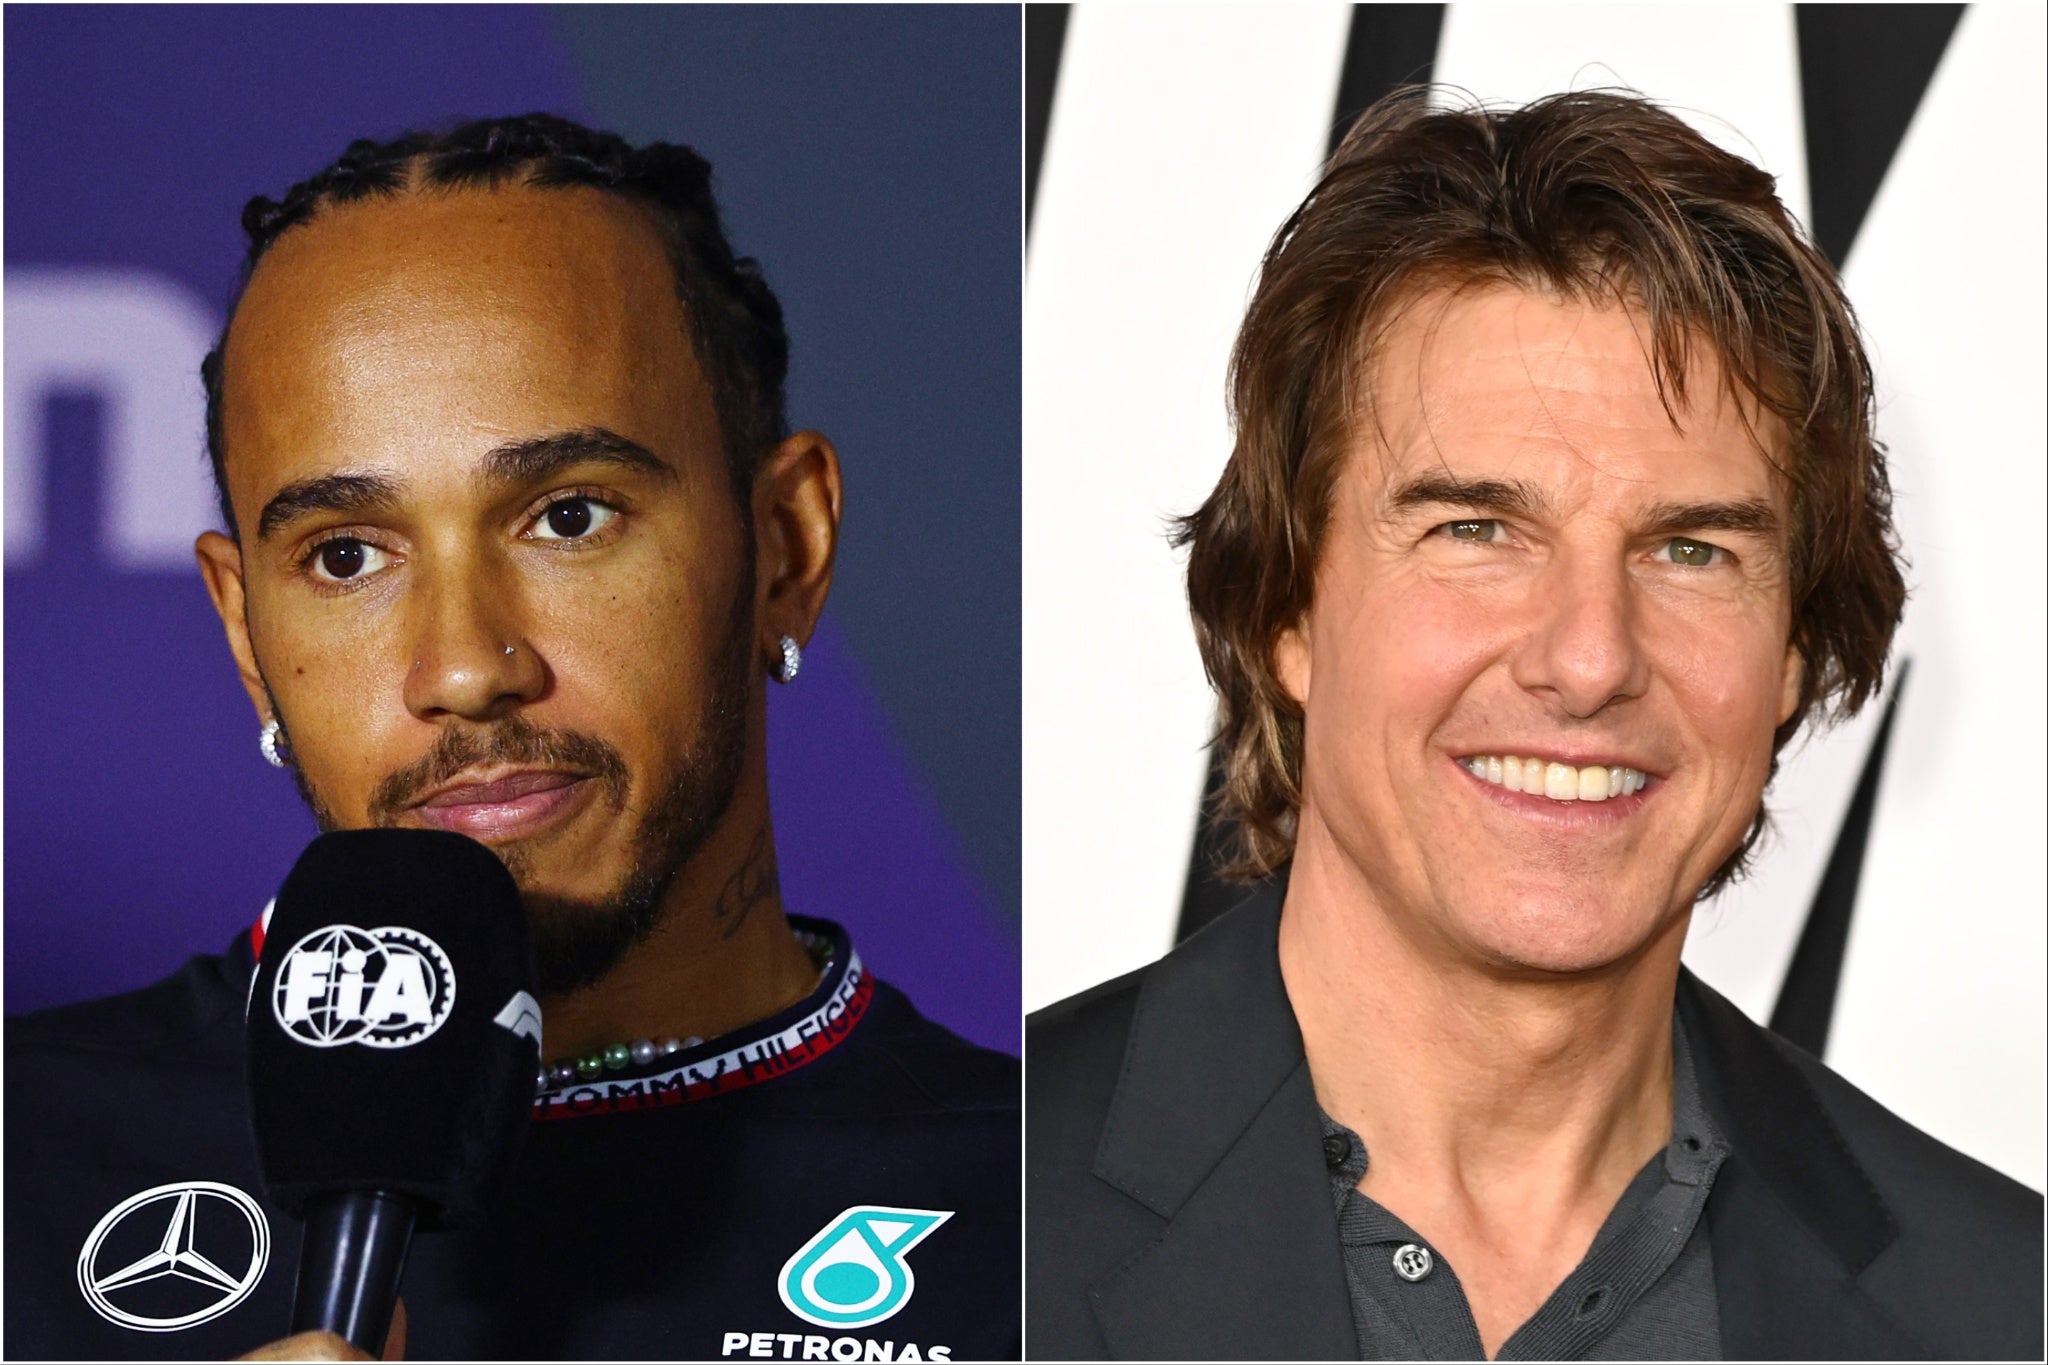 Lewis Hamilton (left) and Tom Cruise